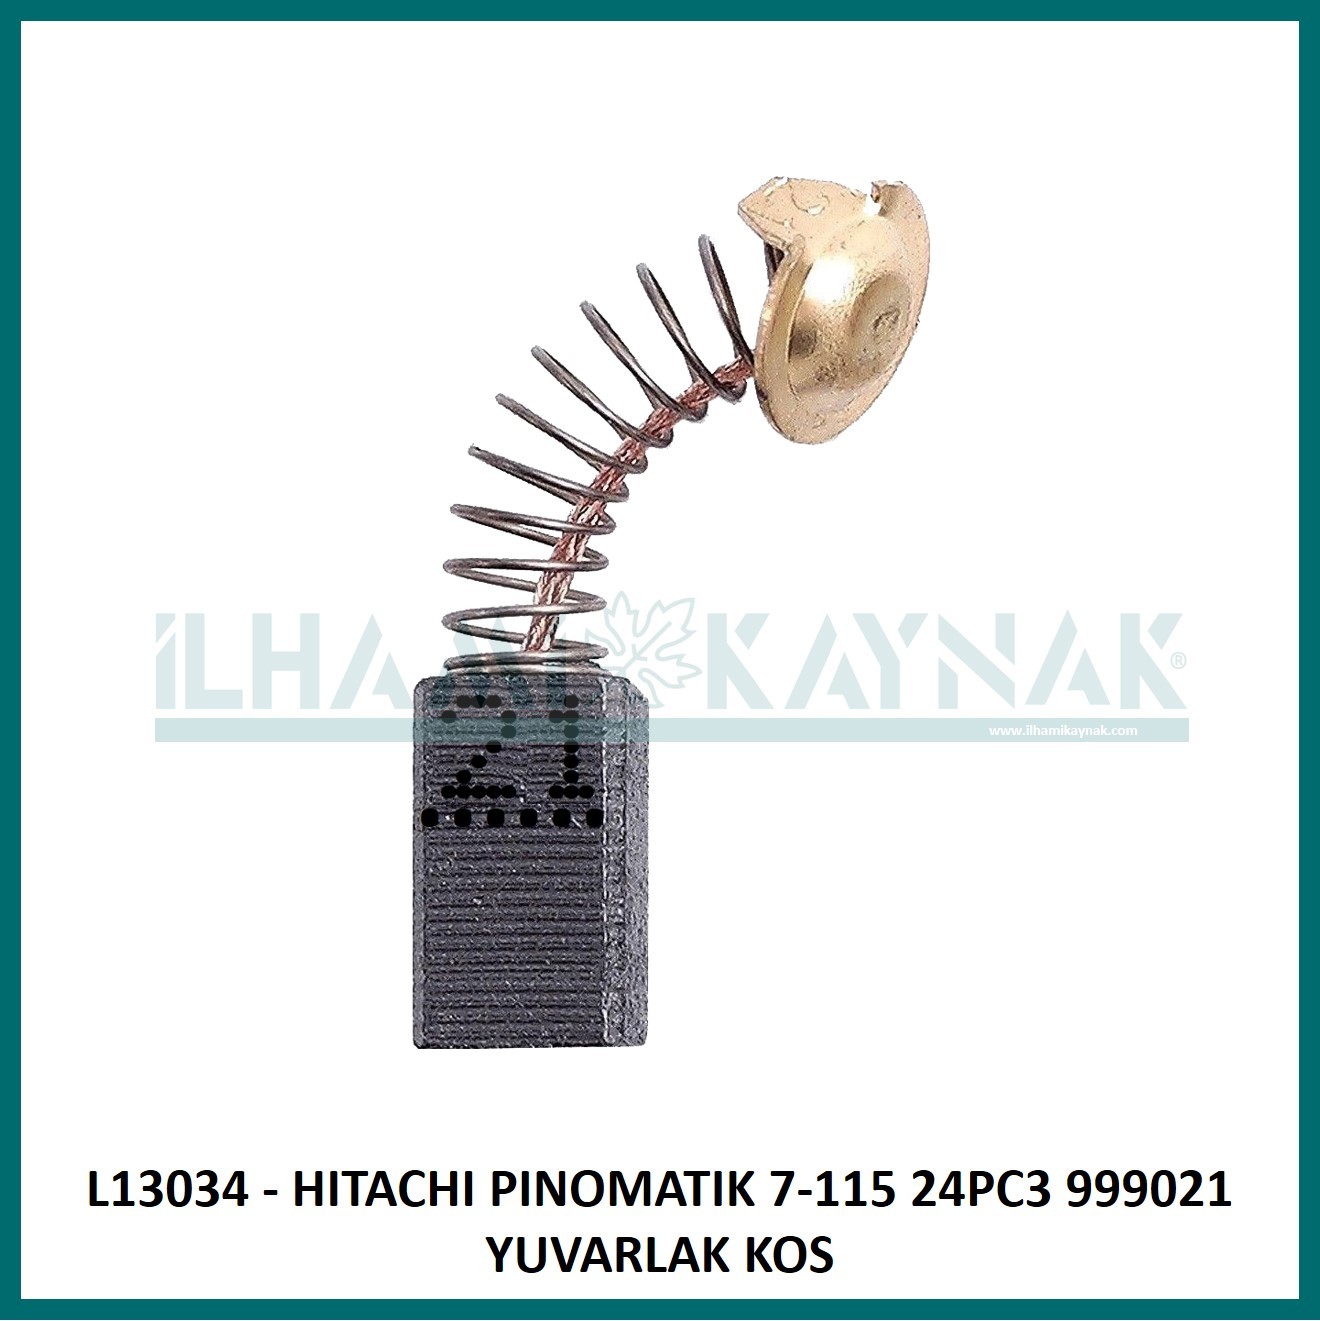 L13034 - HITACHI PINOMATIK 7-115 24PC3 999021 YUVARLAK KOS - 6,5*7,5*13 mm - Minimum Satın Alım: 10 Adet